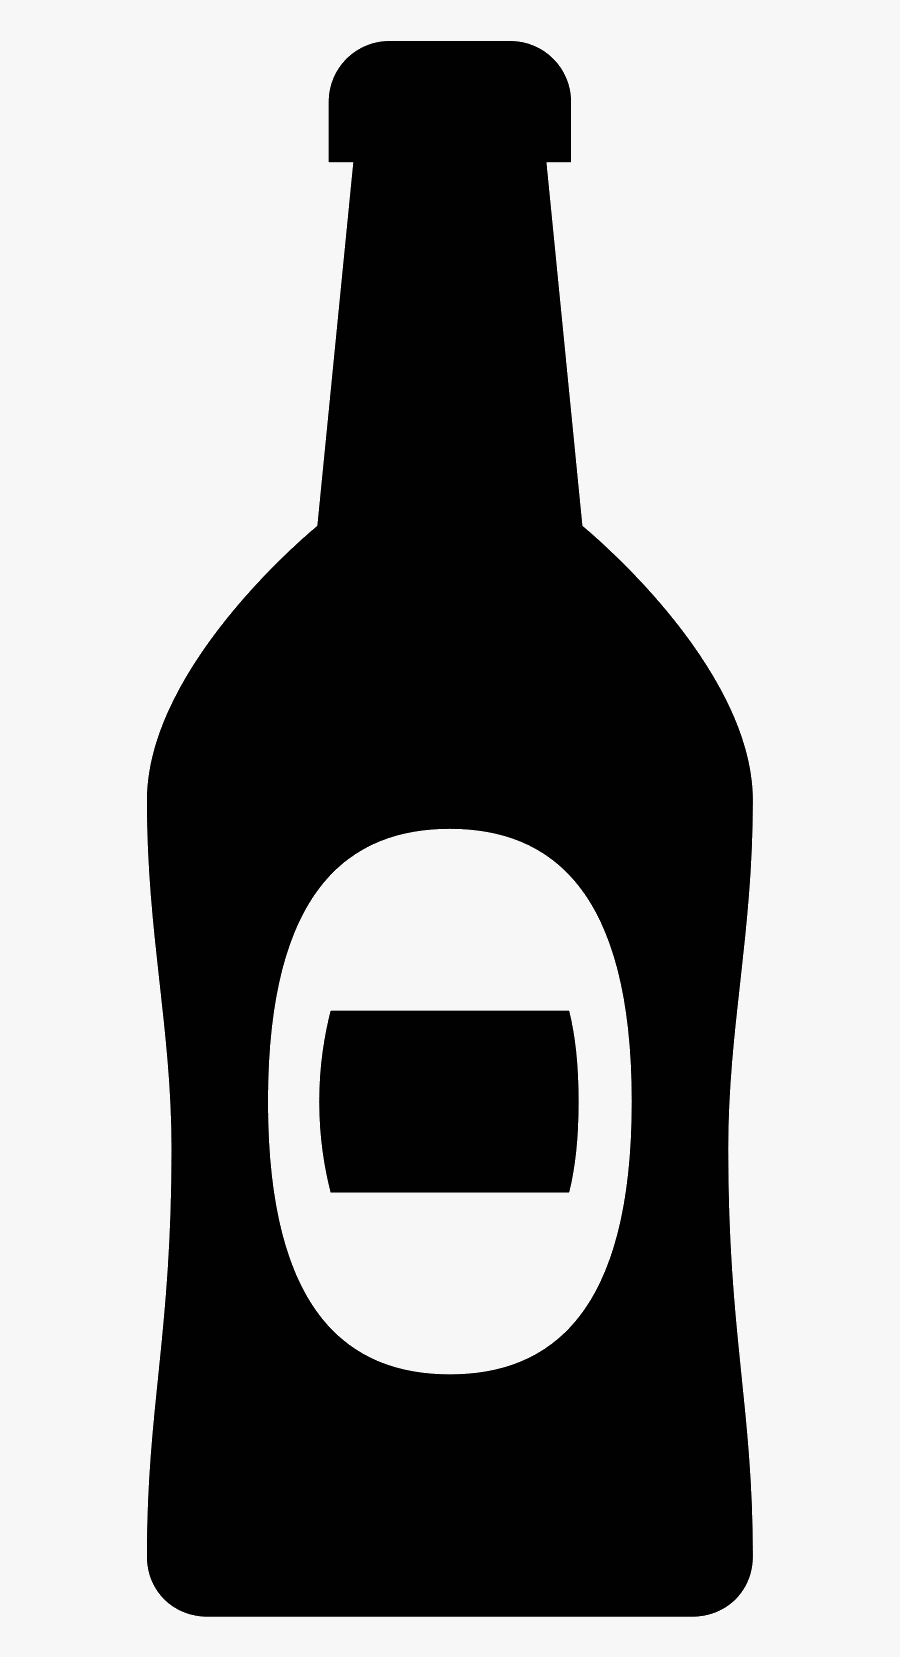 Transparent Beer Bottle Clipart Black And White, Transparent Clipart